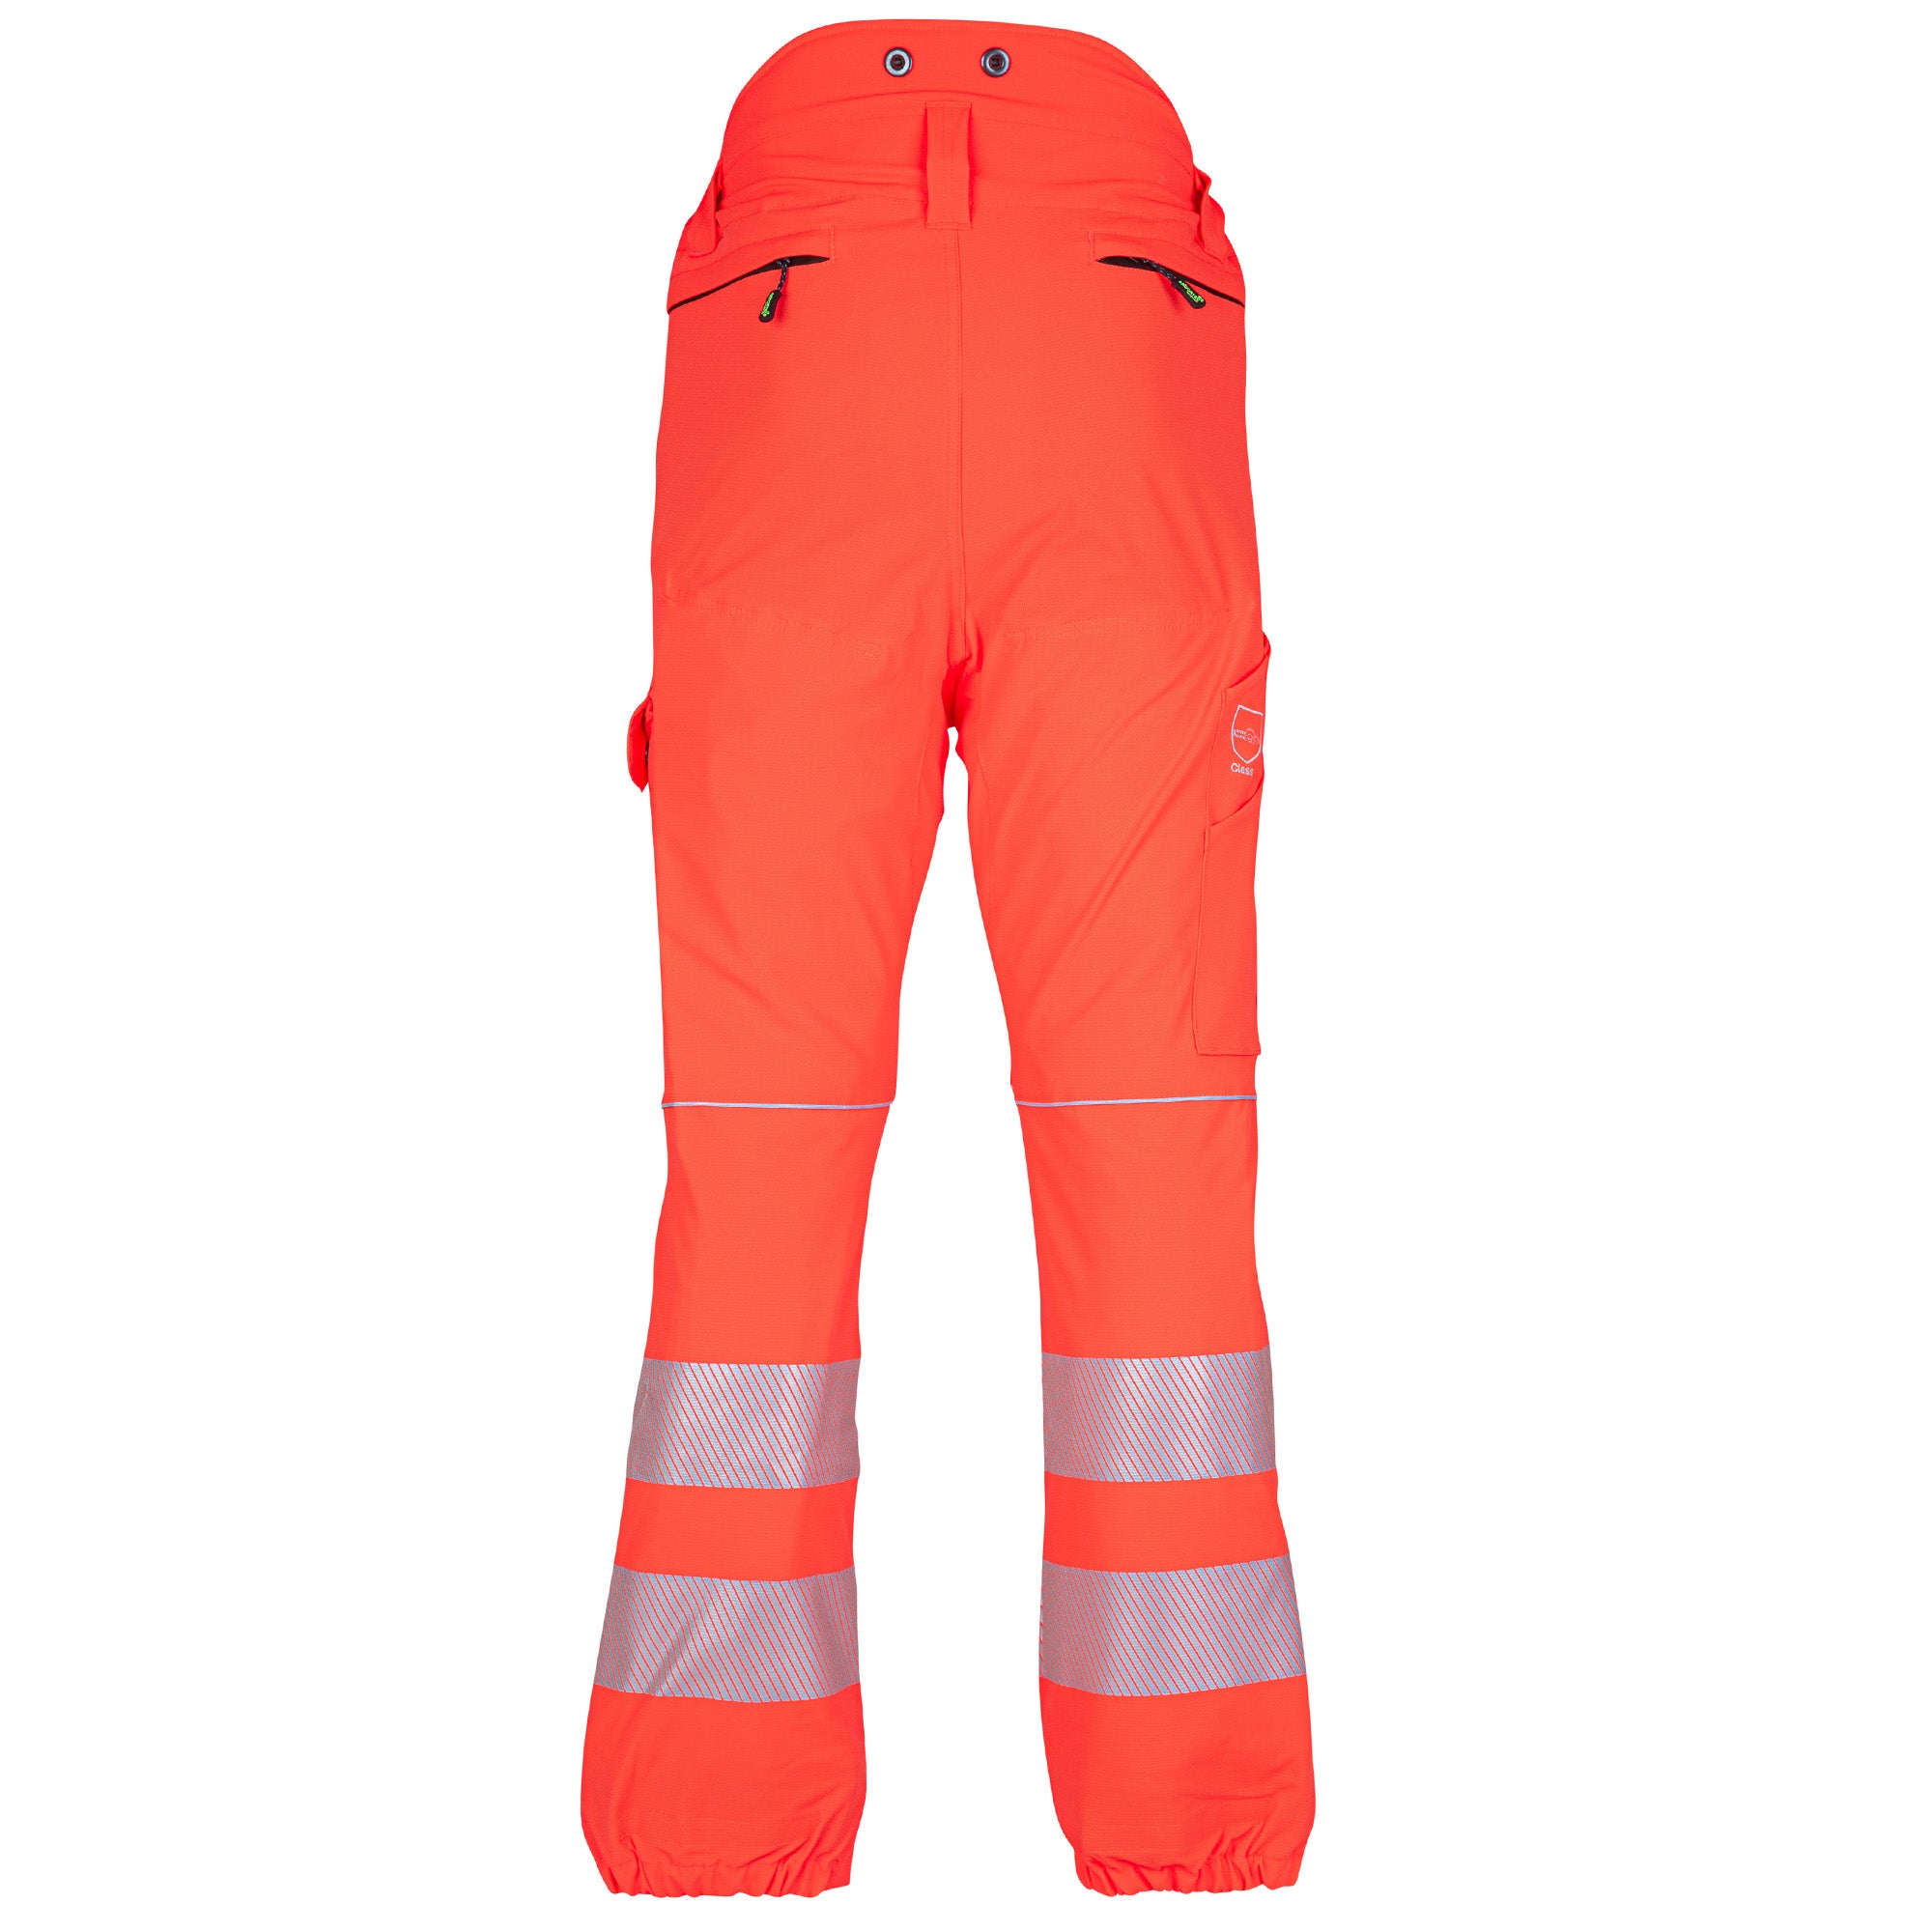 ATHV4050/4040/4035 Breatheflex Chainsaw Trousers Design C Class 1/2/3 - Hi-Vis Orange